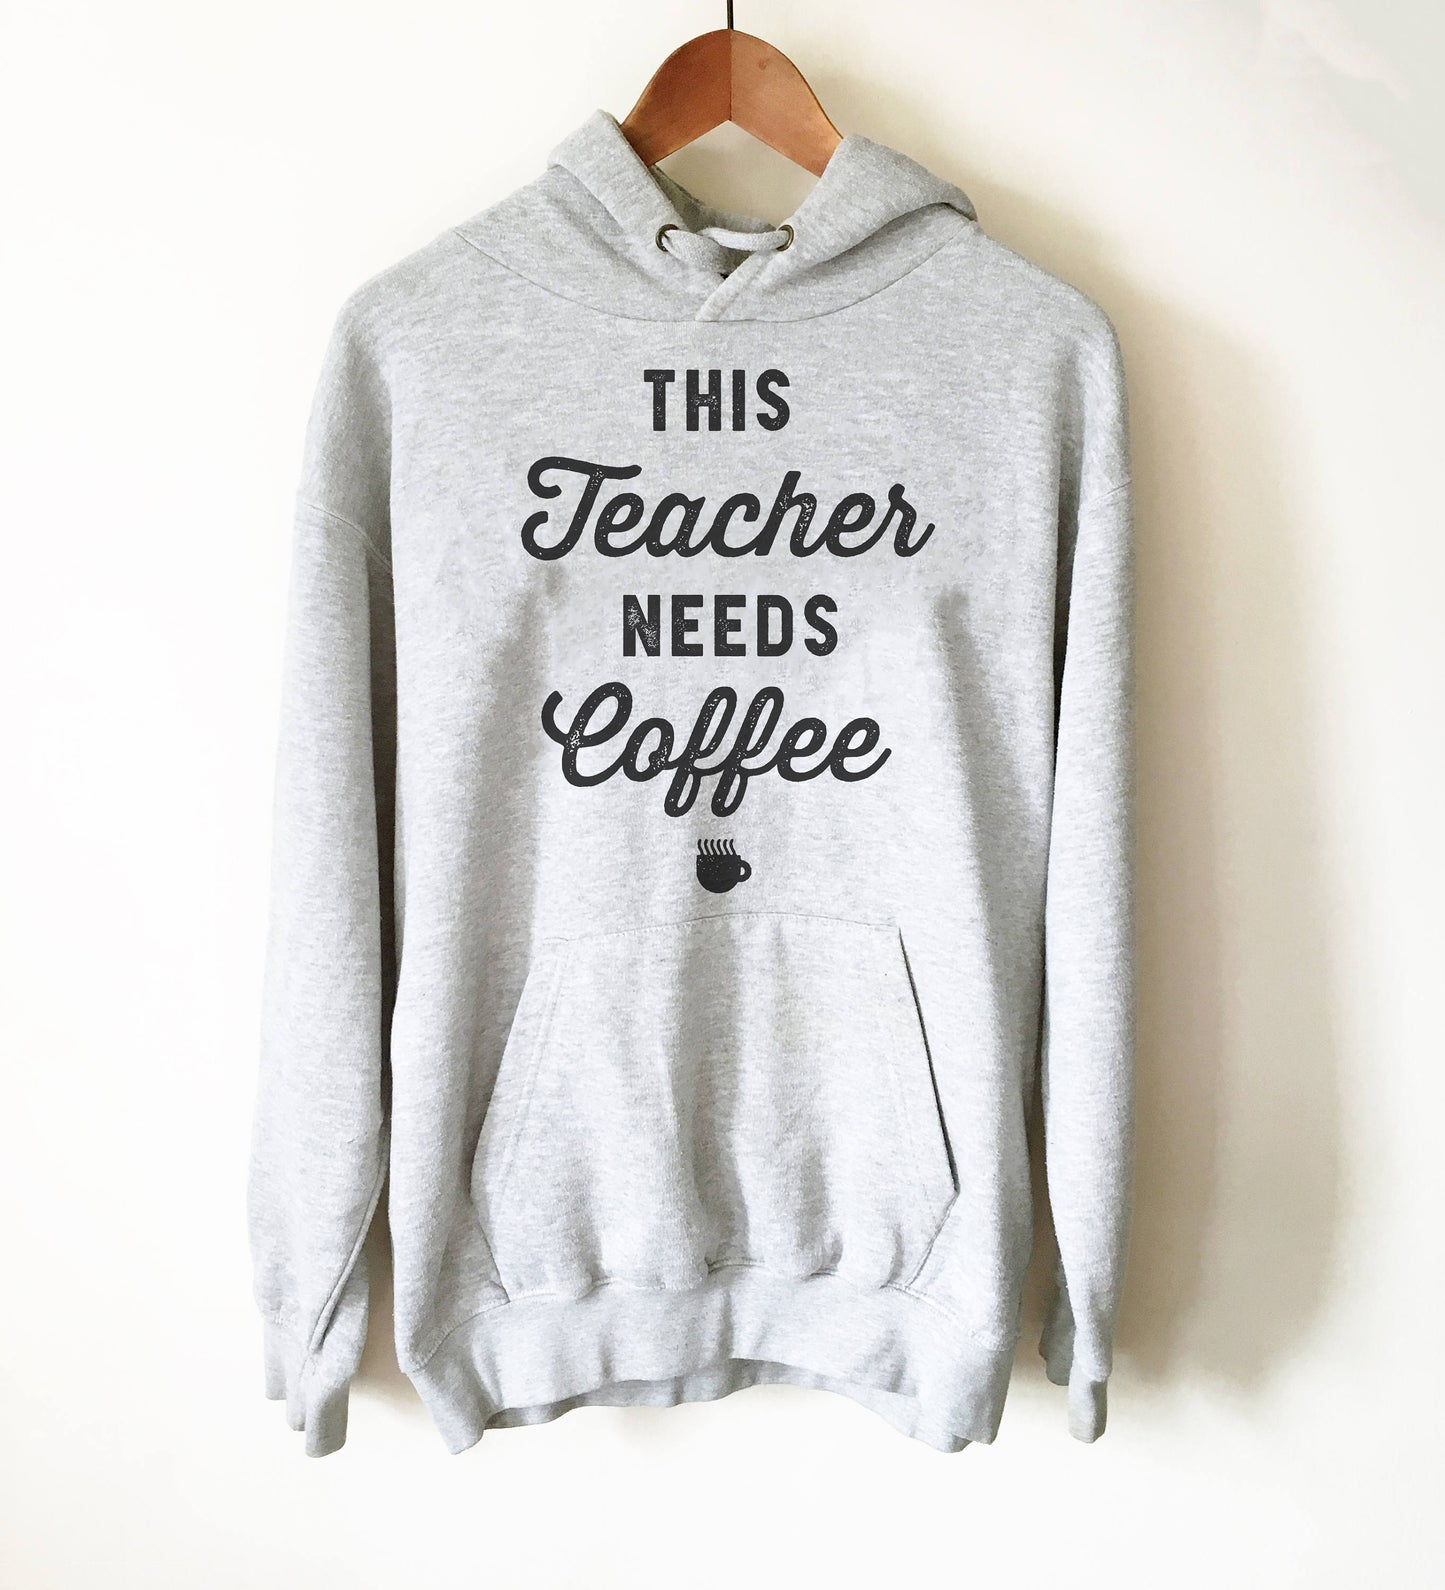 This Teacher Needs Coffee Hoodie - Teacher Appreciation, Teacher Shirts, Teacher Gift, Teacher Team Shirt, Coffee Shirt, Teacher TShirt